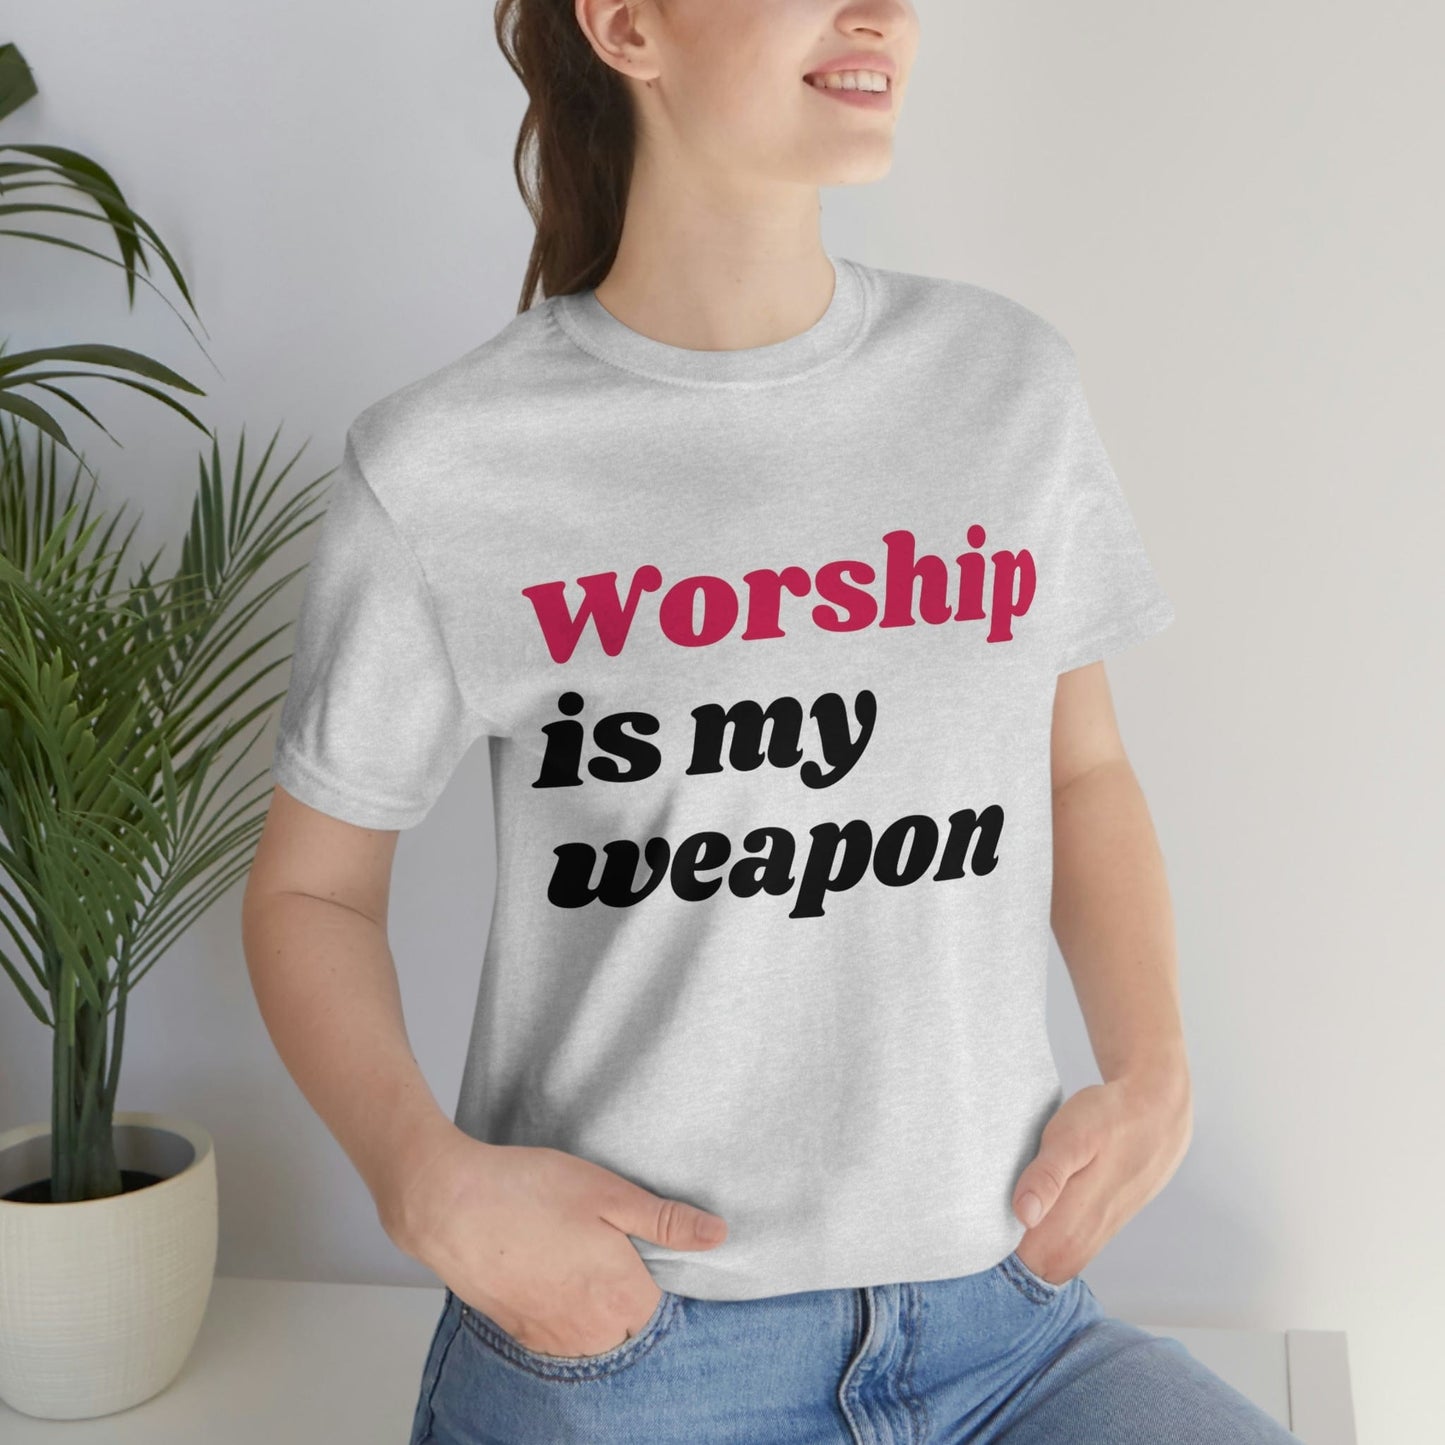 Worship Is My Weapon (Graphic Fuchsia & Black Text) Unisex Jersey Short Sleeve Tee - Style: Bella+Canvas 3001